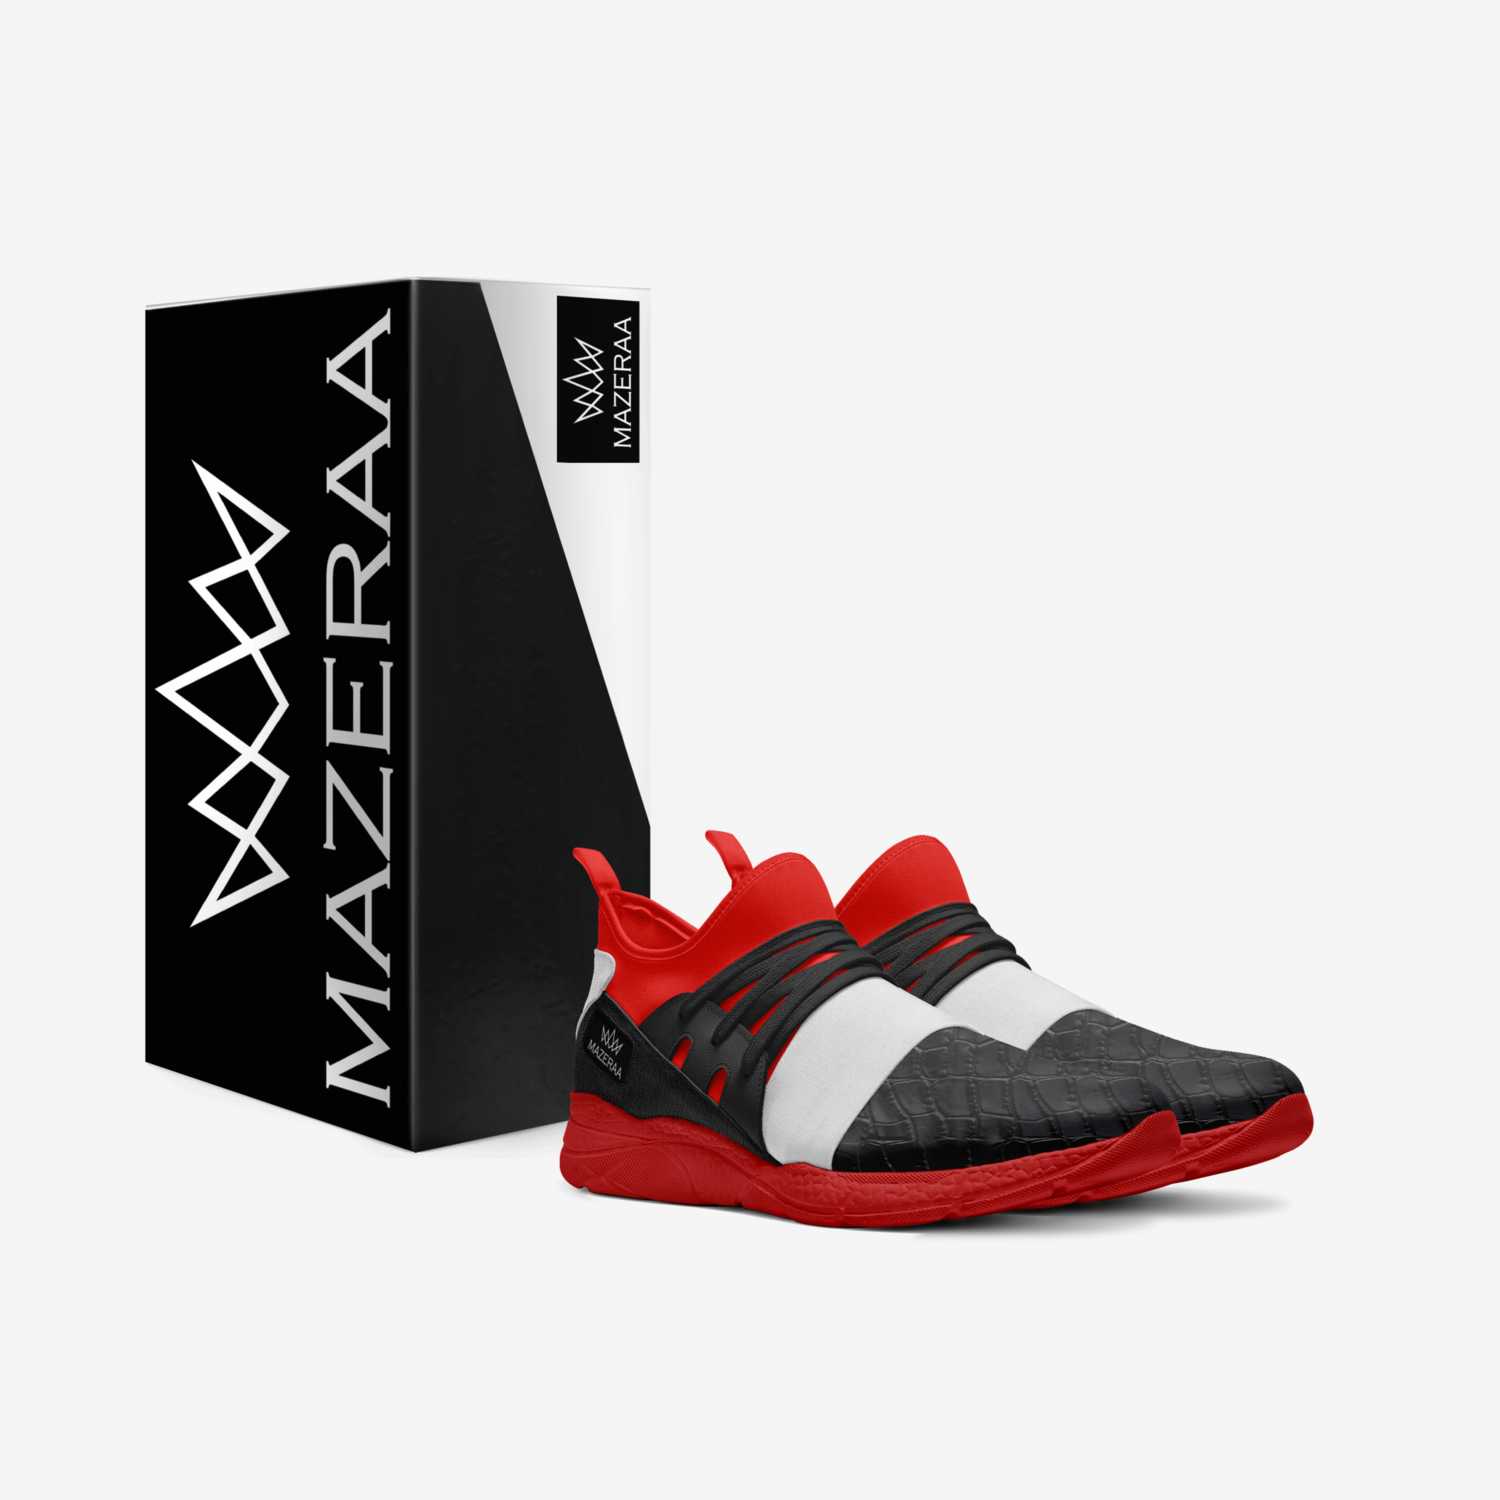 zroom custom made in Italy shoes by Mazeraa Carter | Box view